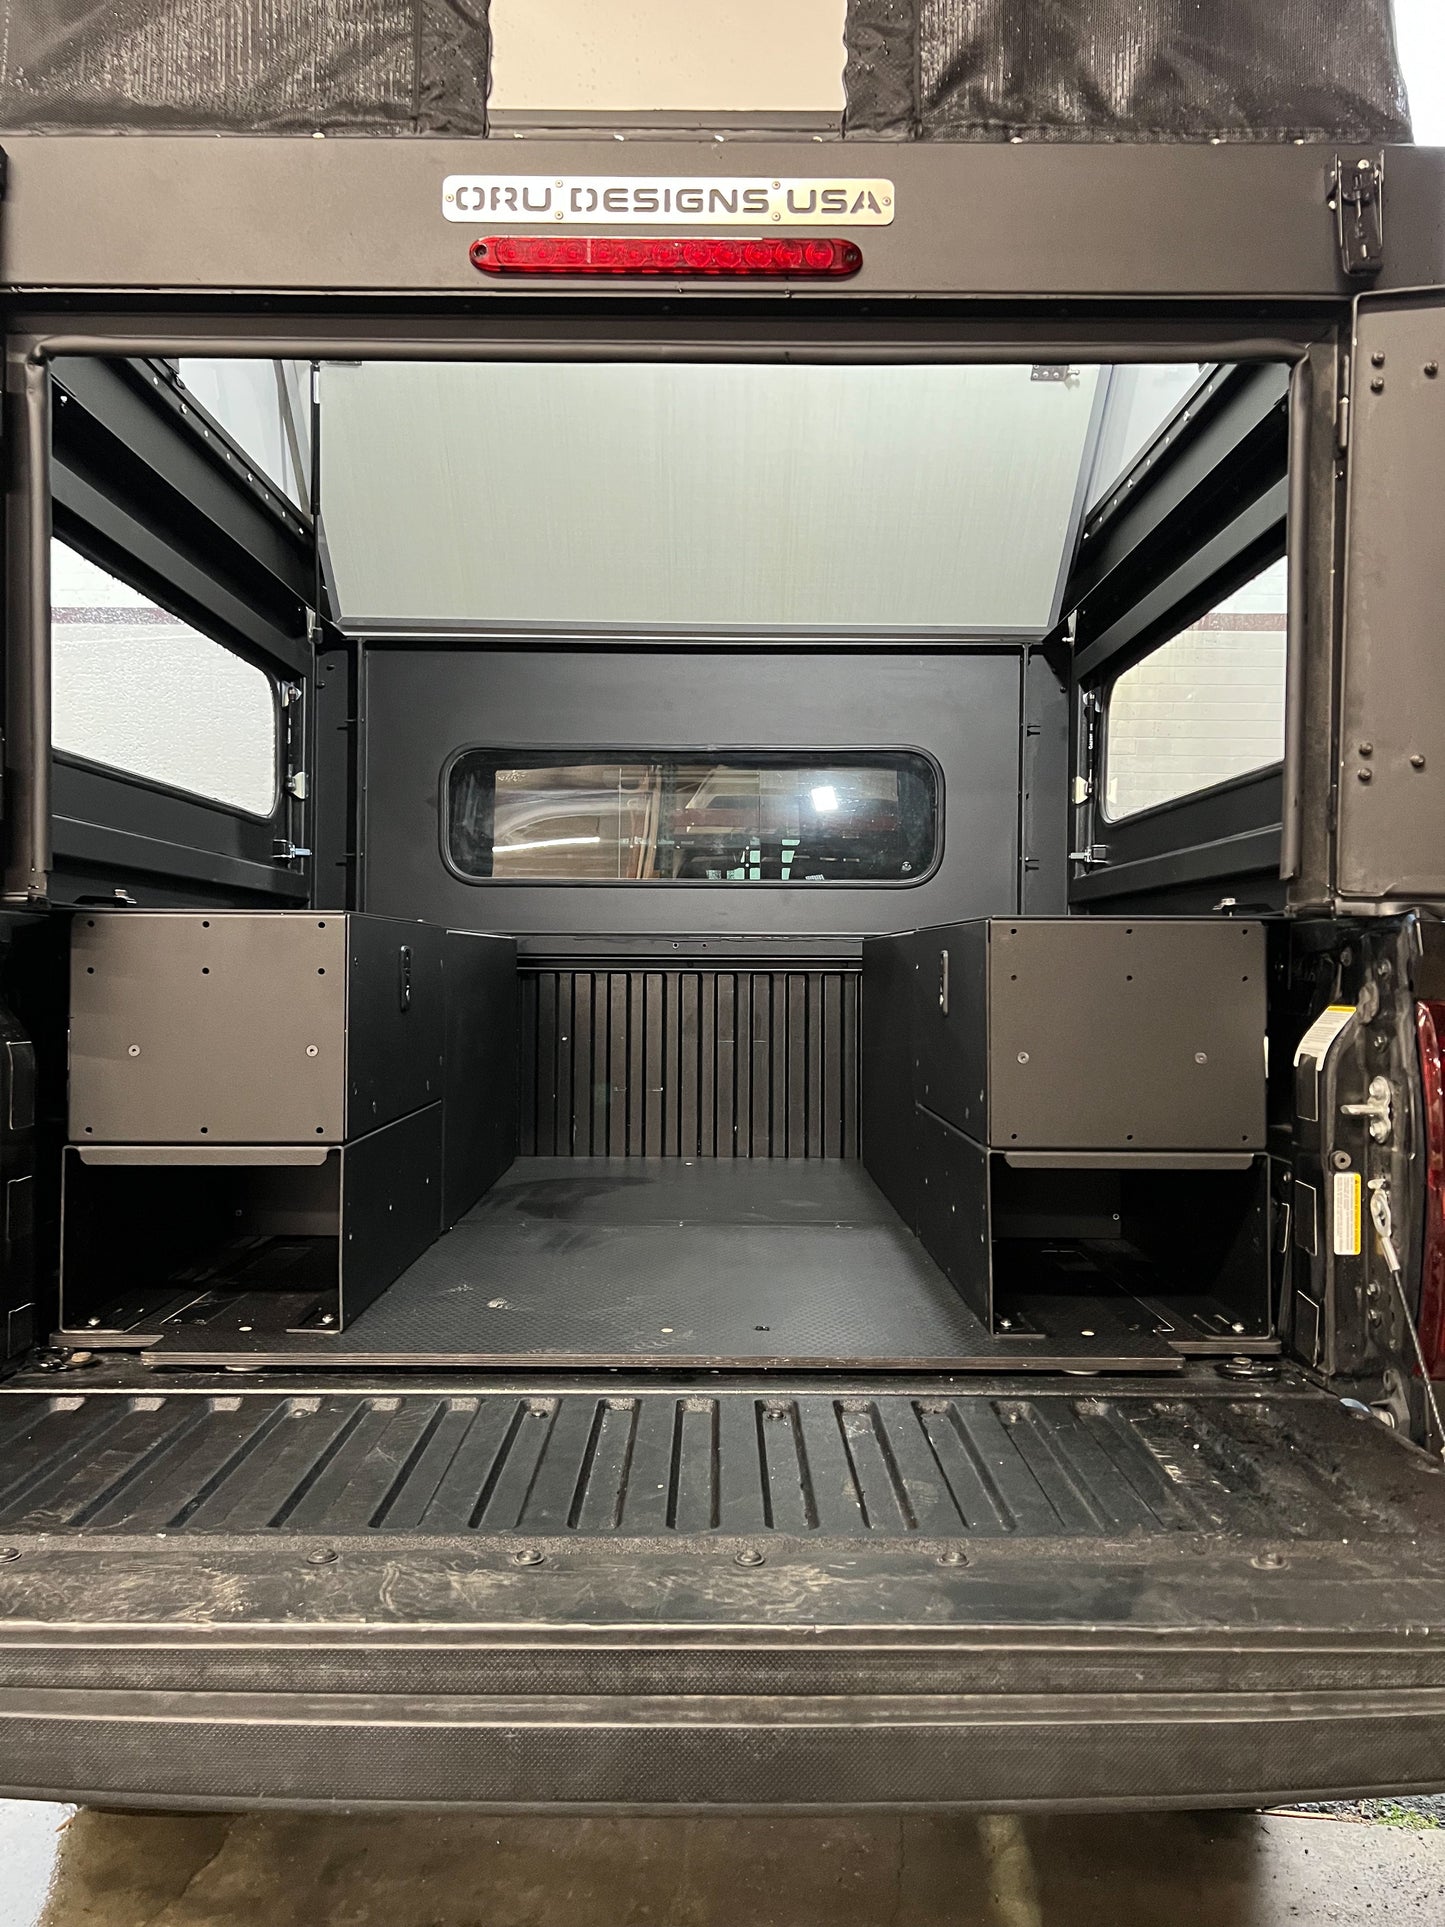 Fullsize 5.5ft Truck Camper Interior